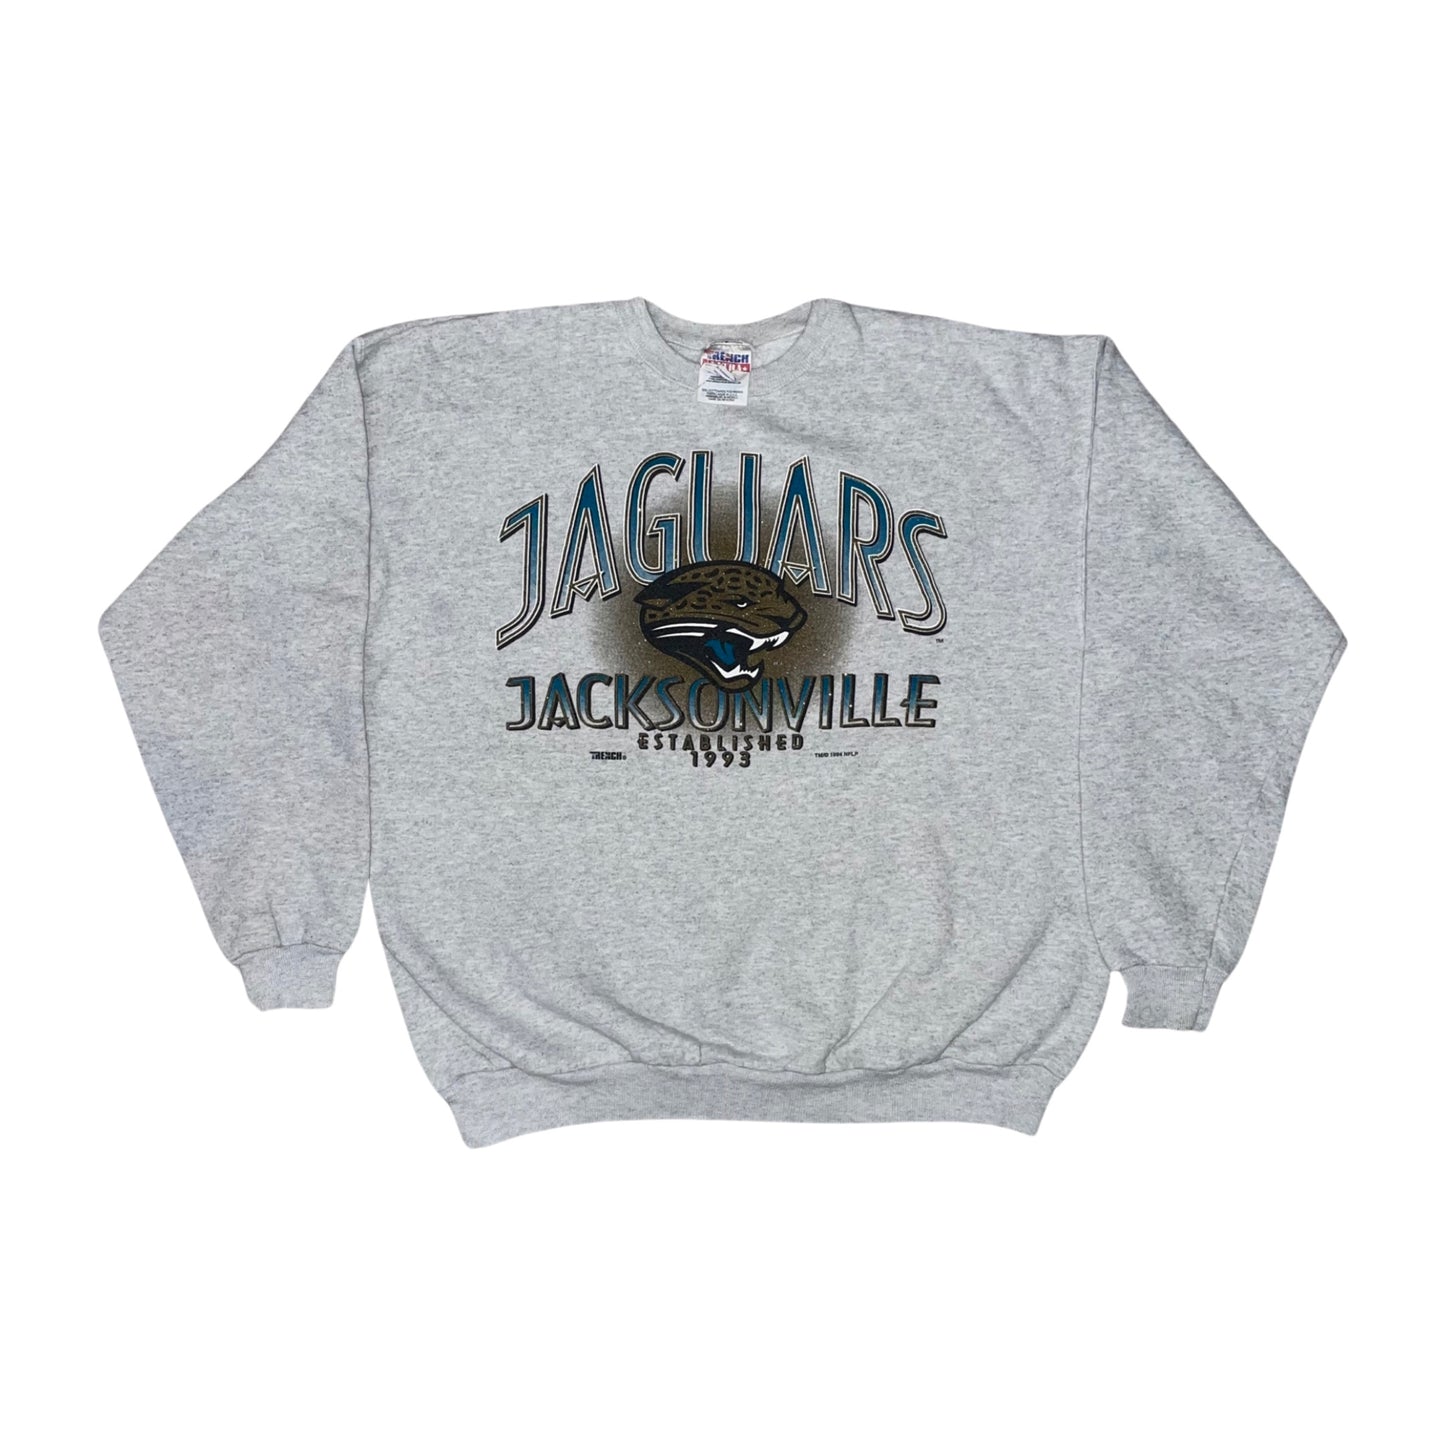 Vintage Jacksonville Jaguars 1994 sweatshirt size M/L